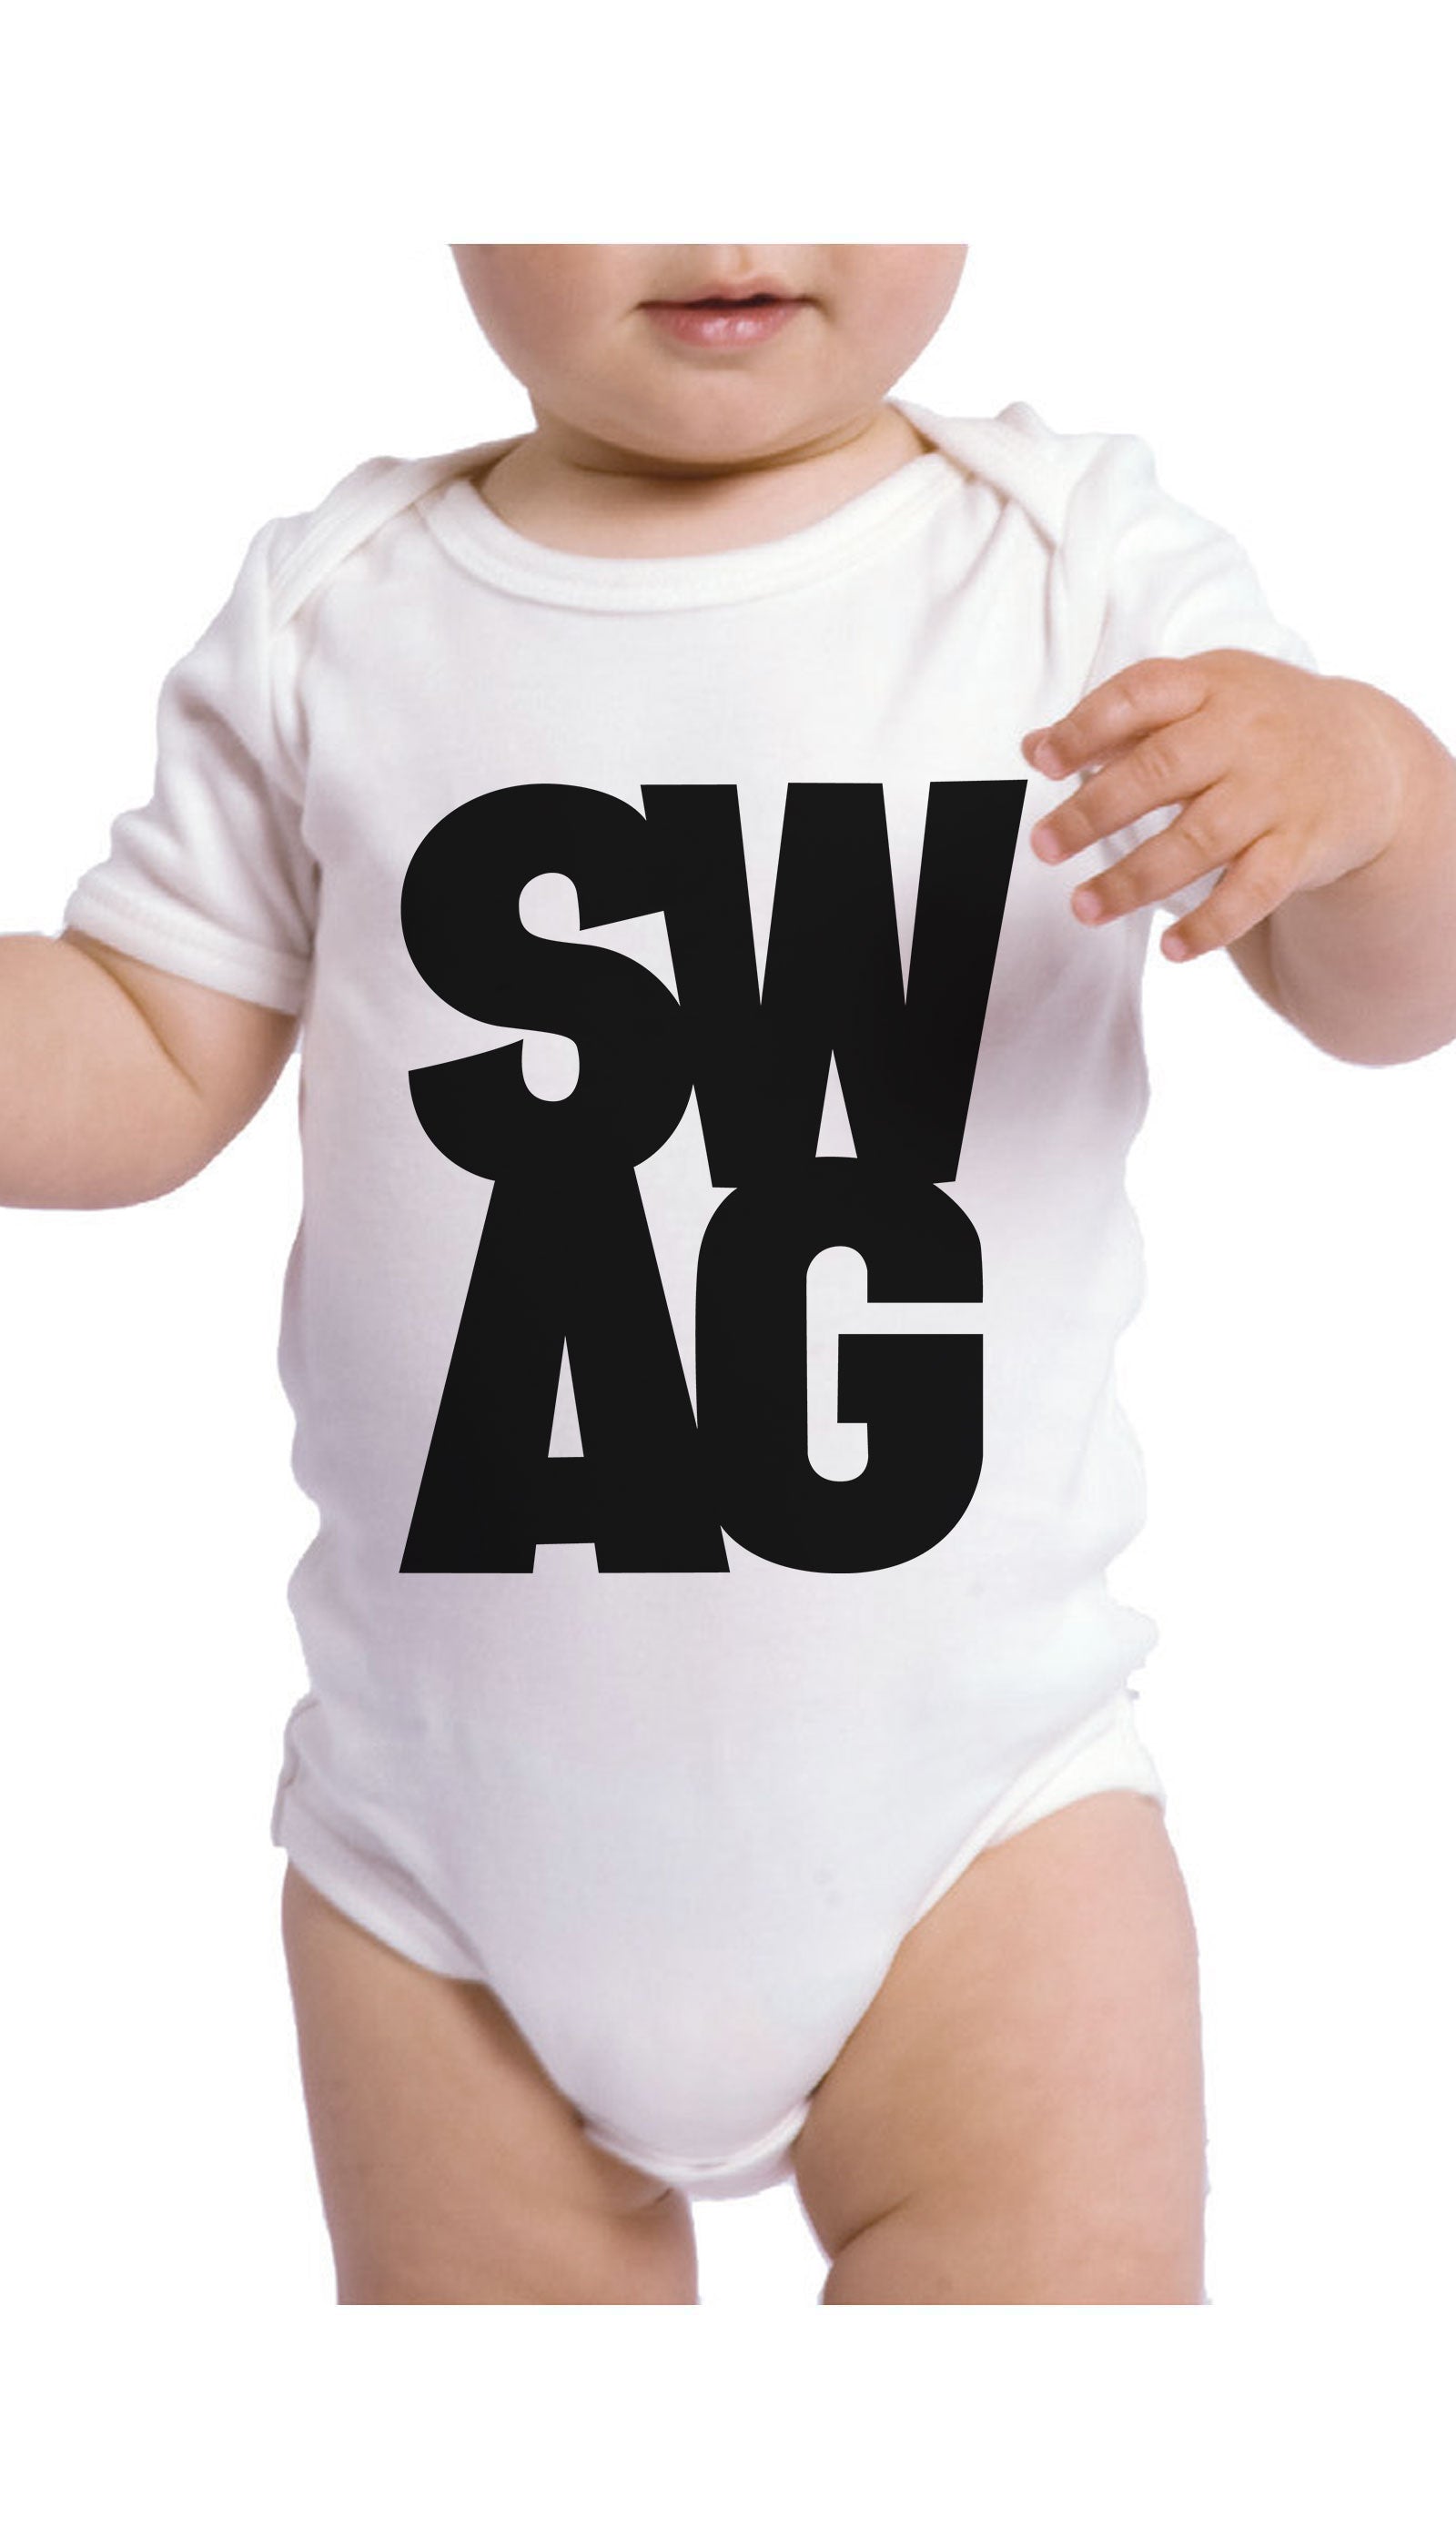 Swag Infant Onesie